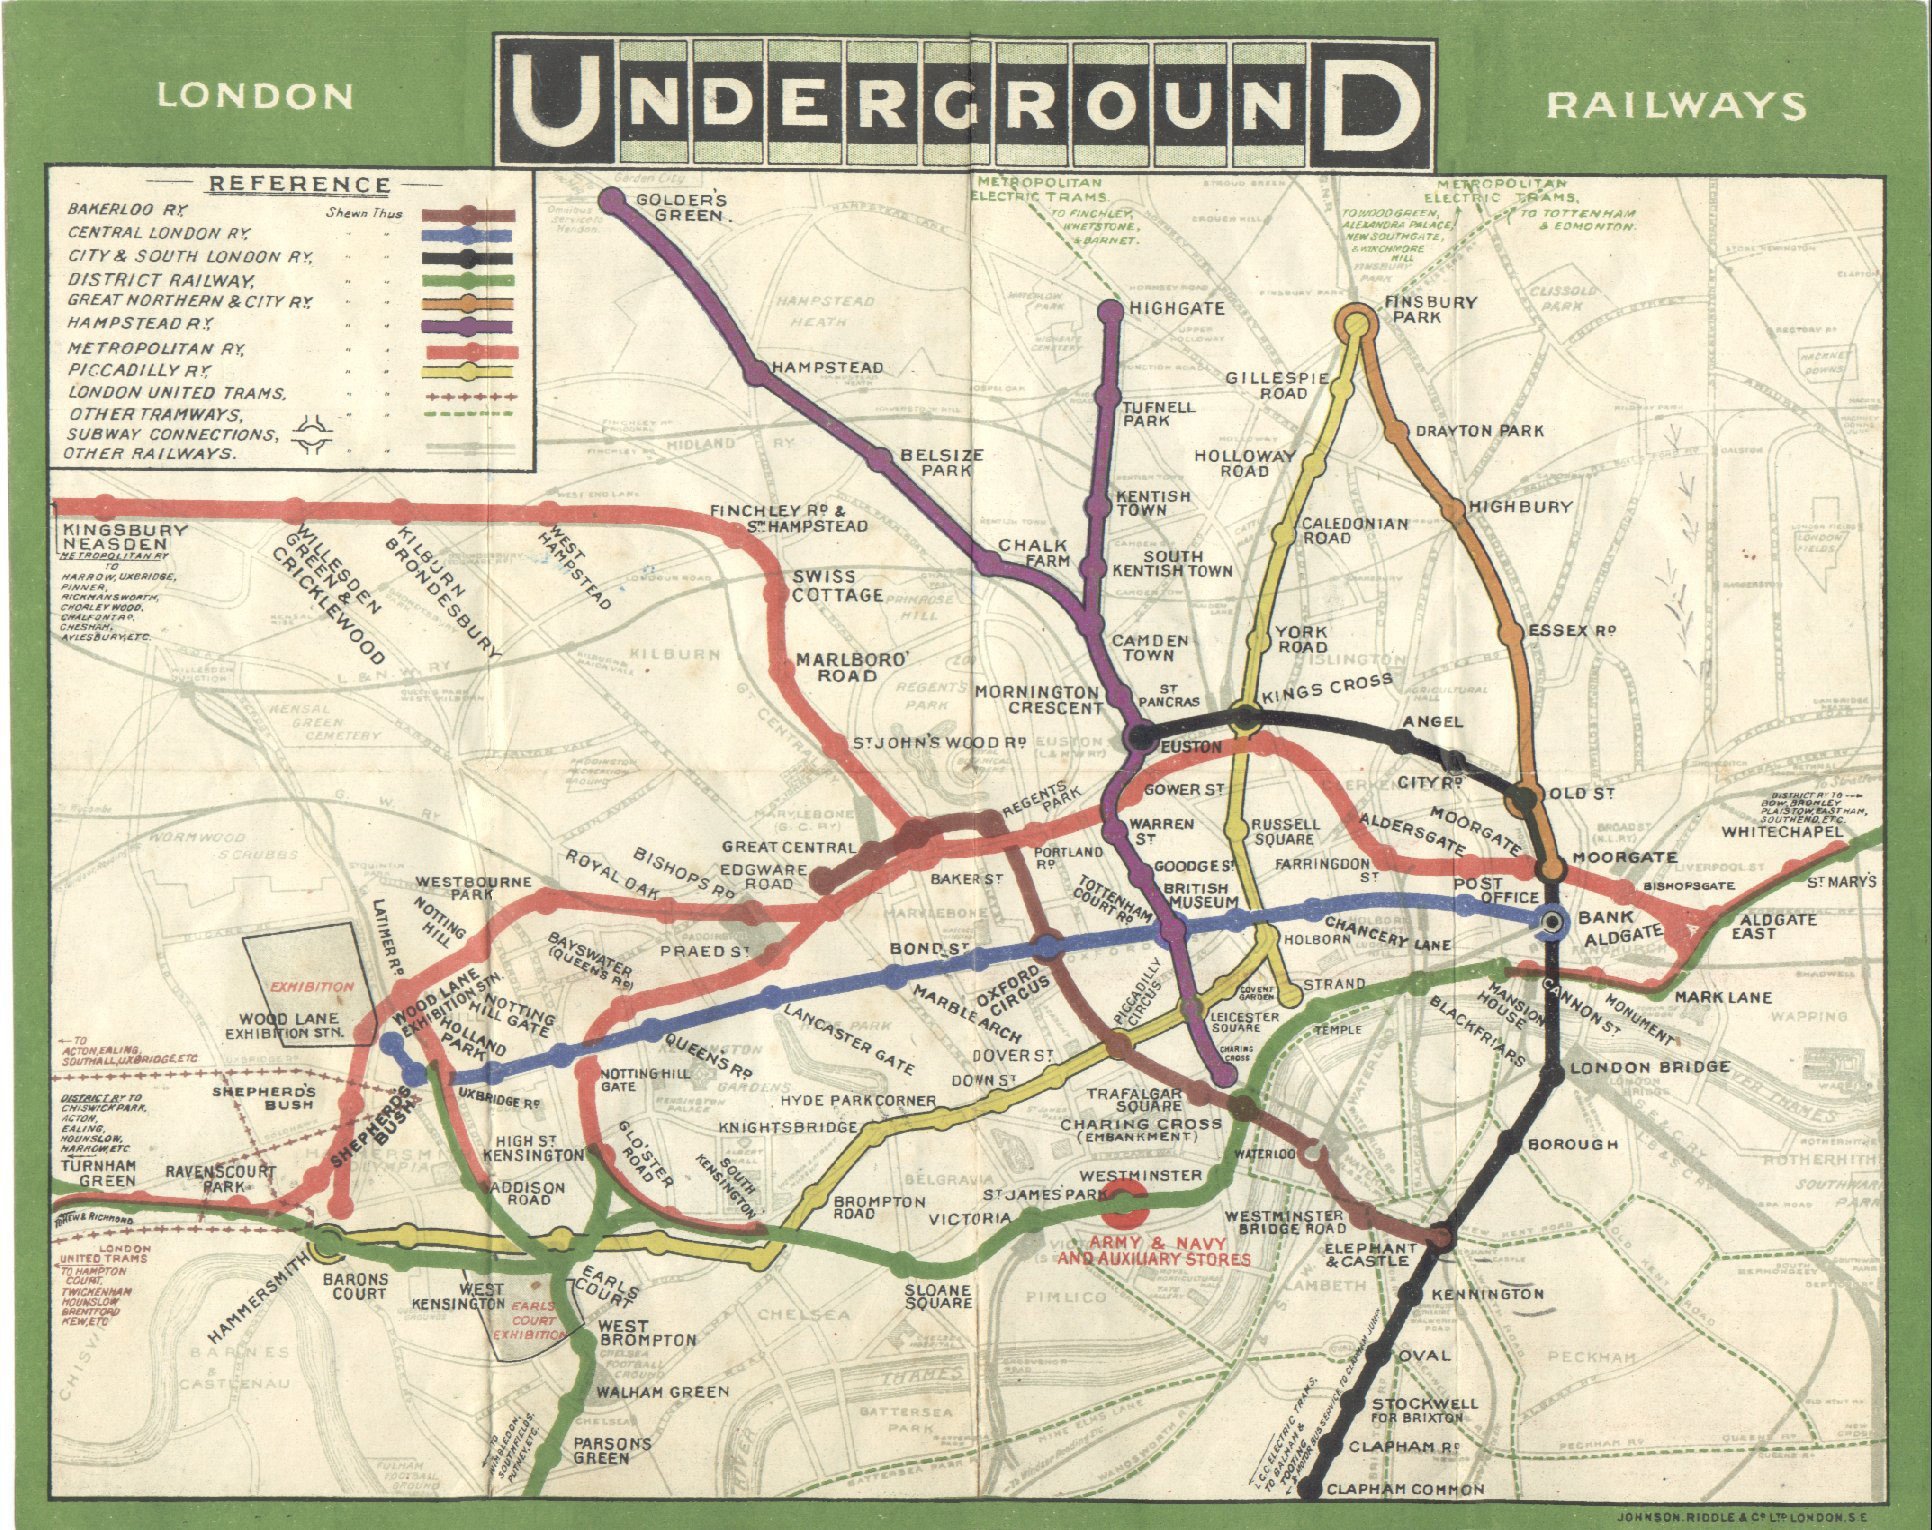 London Underground map of 1908